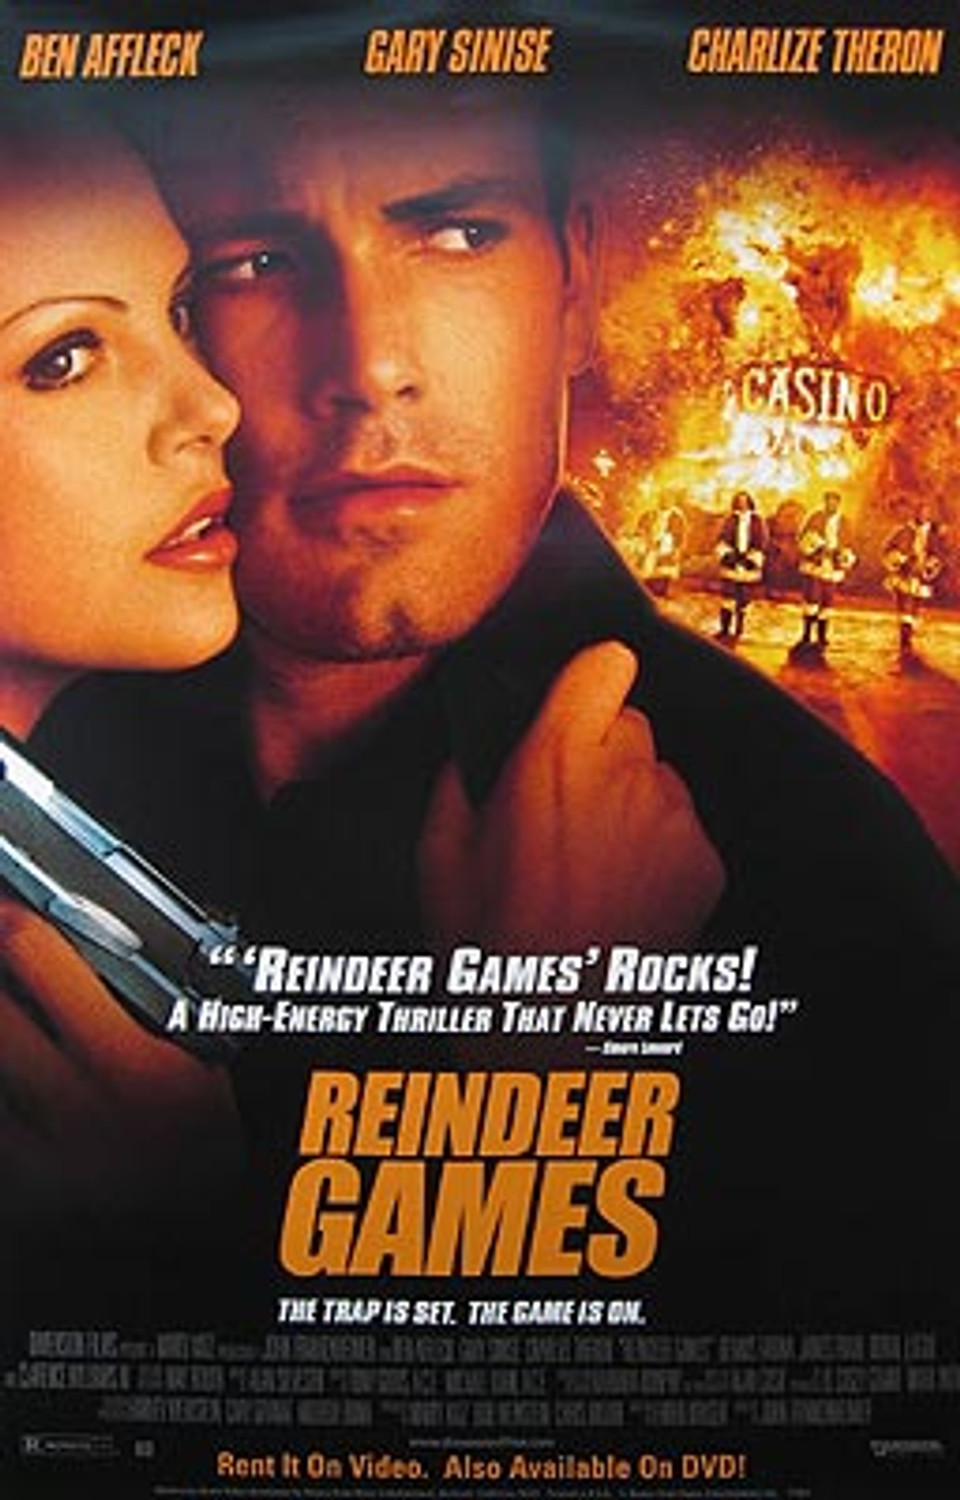 REINDEER GAMES (Video) POSTER buy movie posters at Starstills.com  (SSB2134-503086)